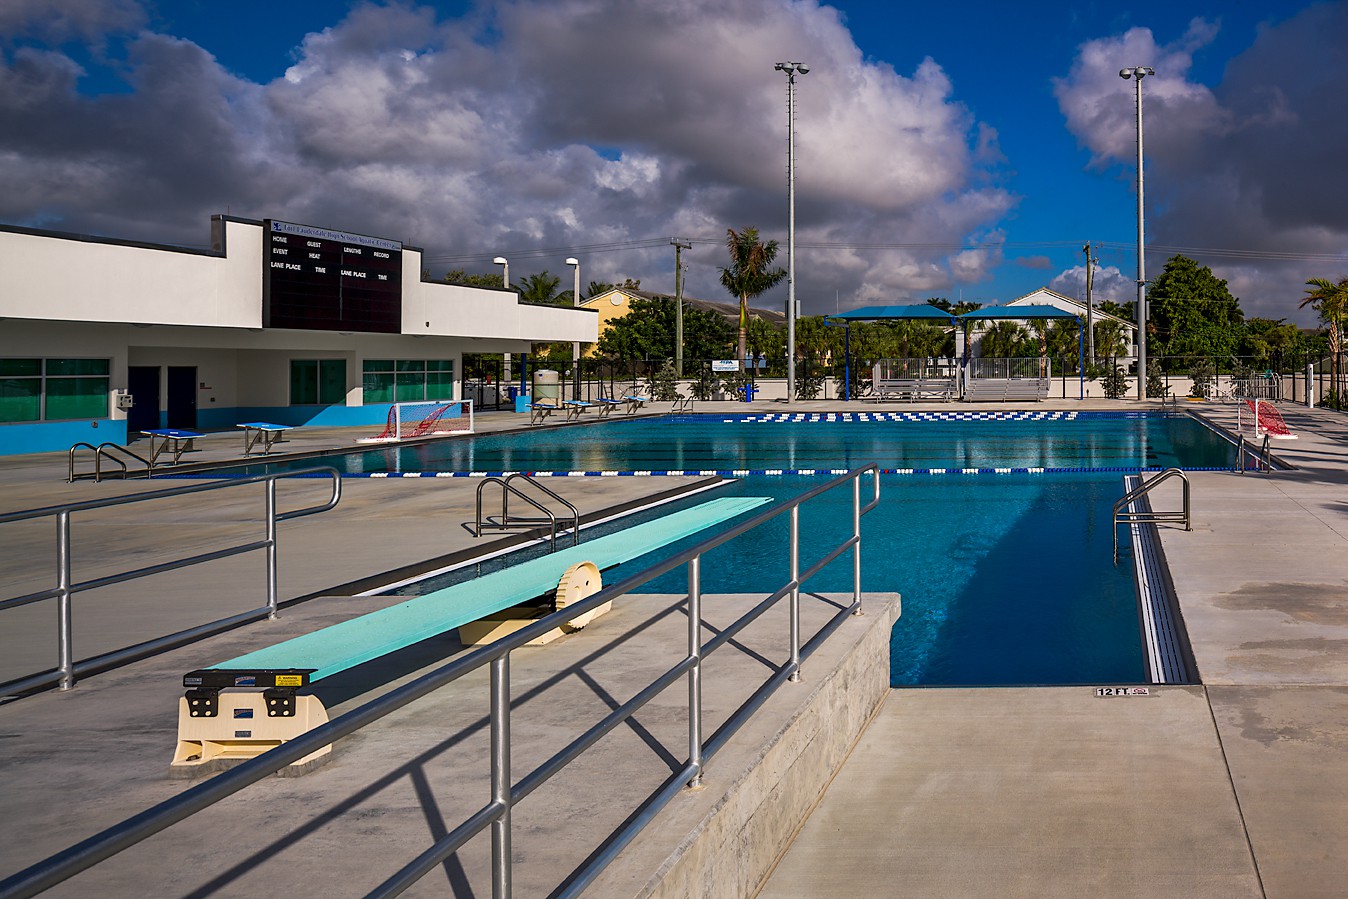 Pool - Ft. Lauderdale High School Pool Facility